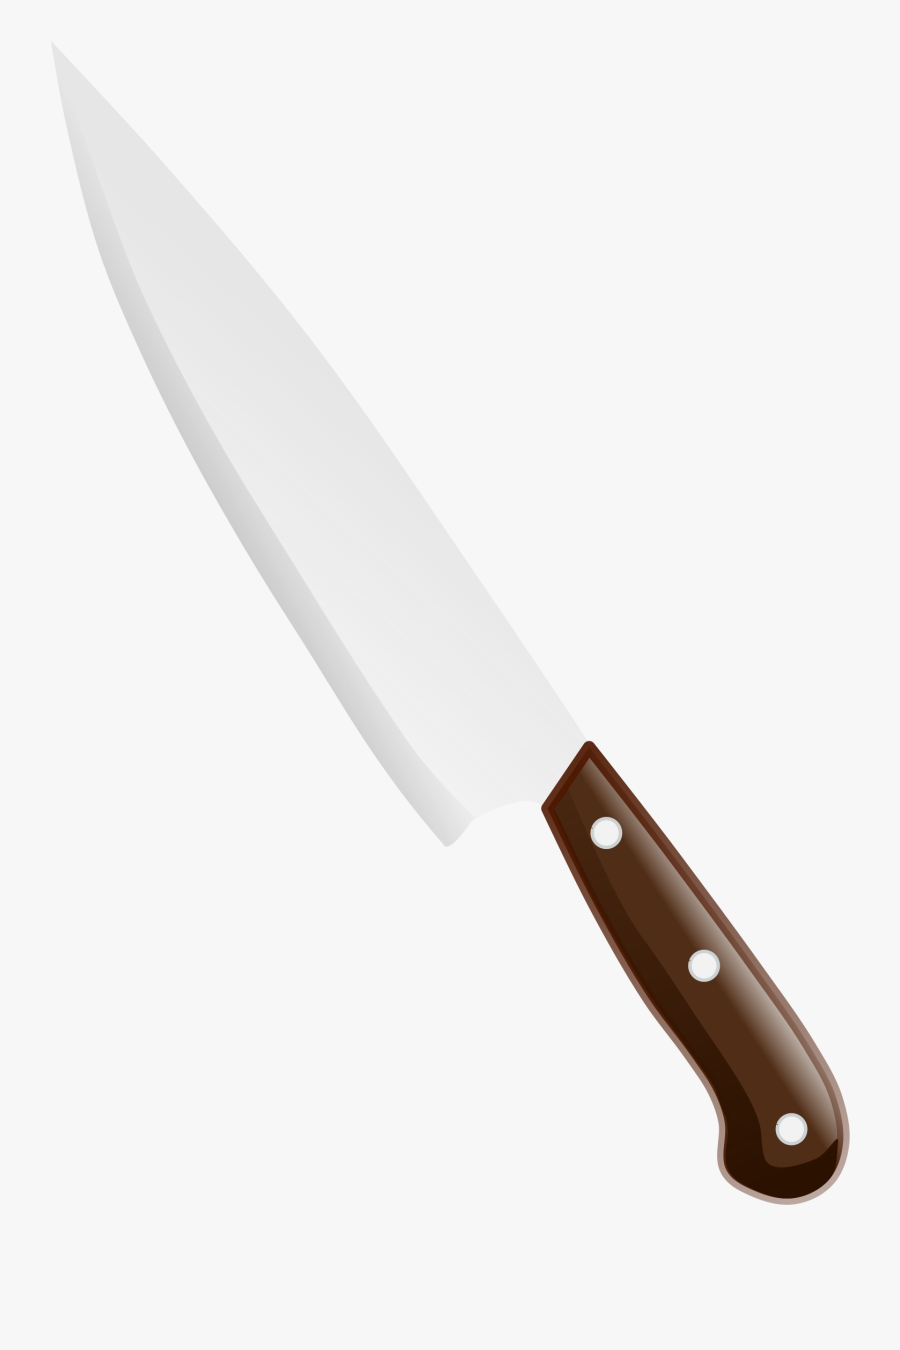 Канцелярский нож на белом фоне